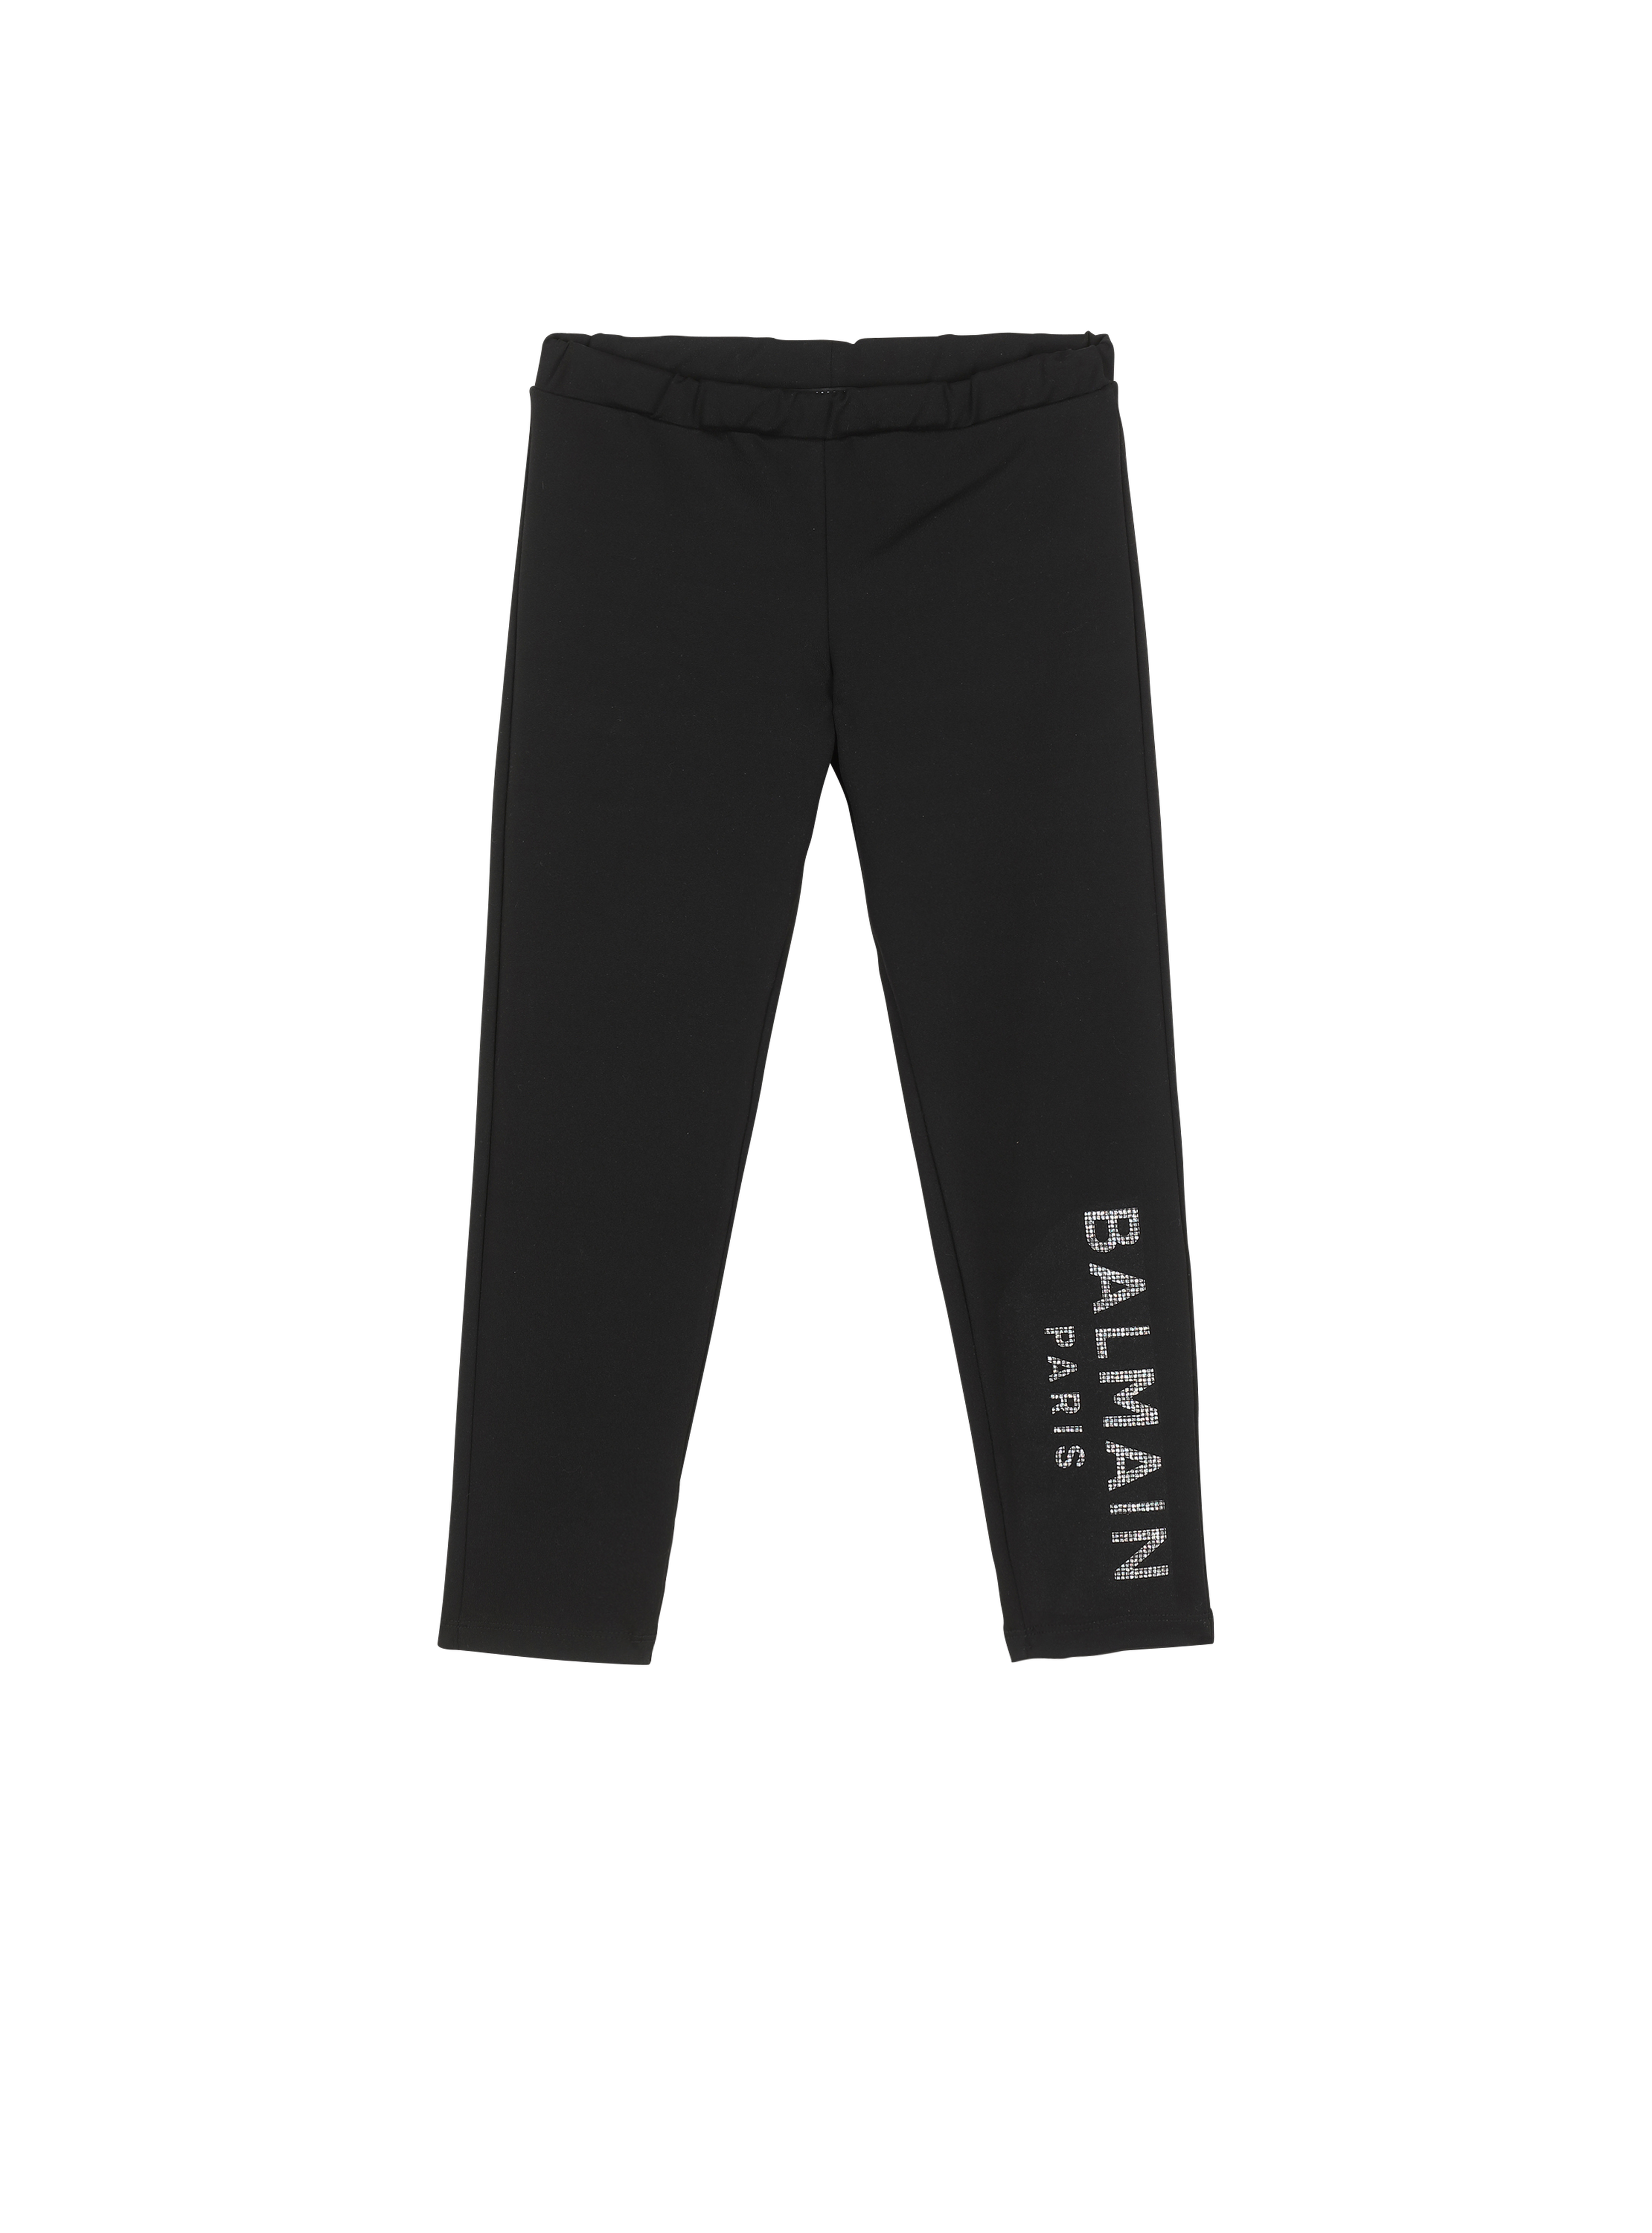 Cotton leggings with Balmain logo, black